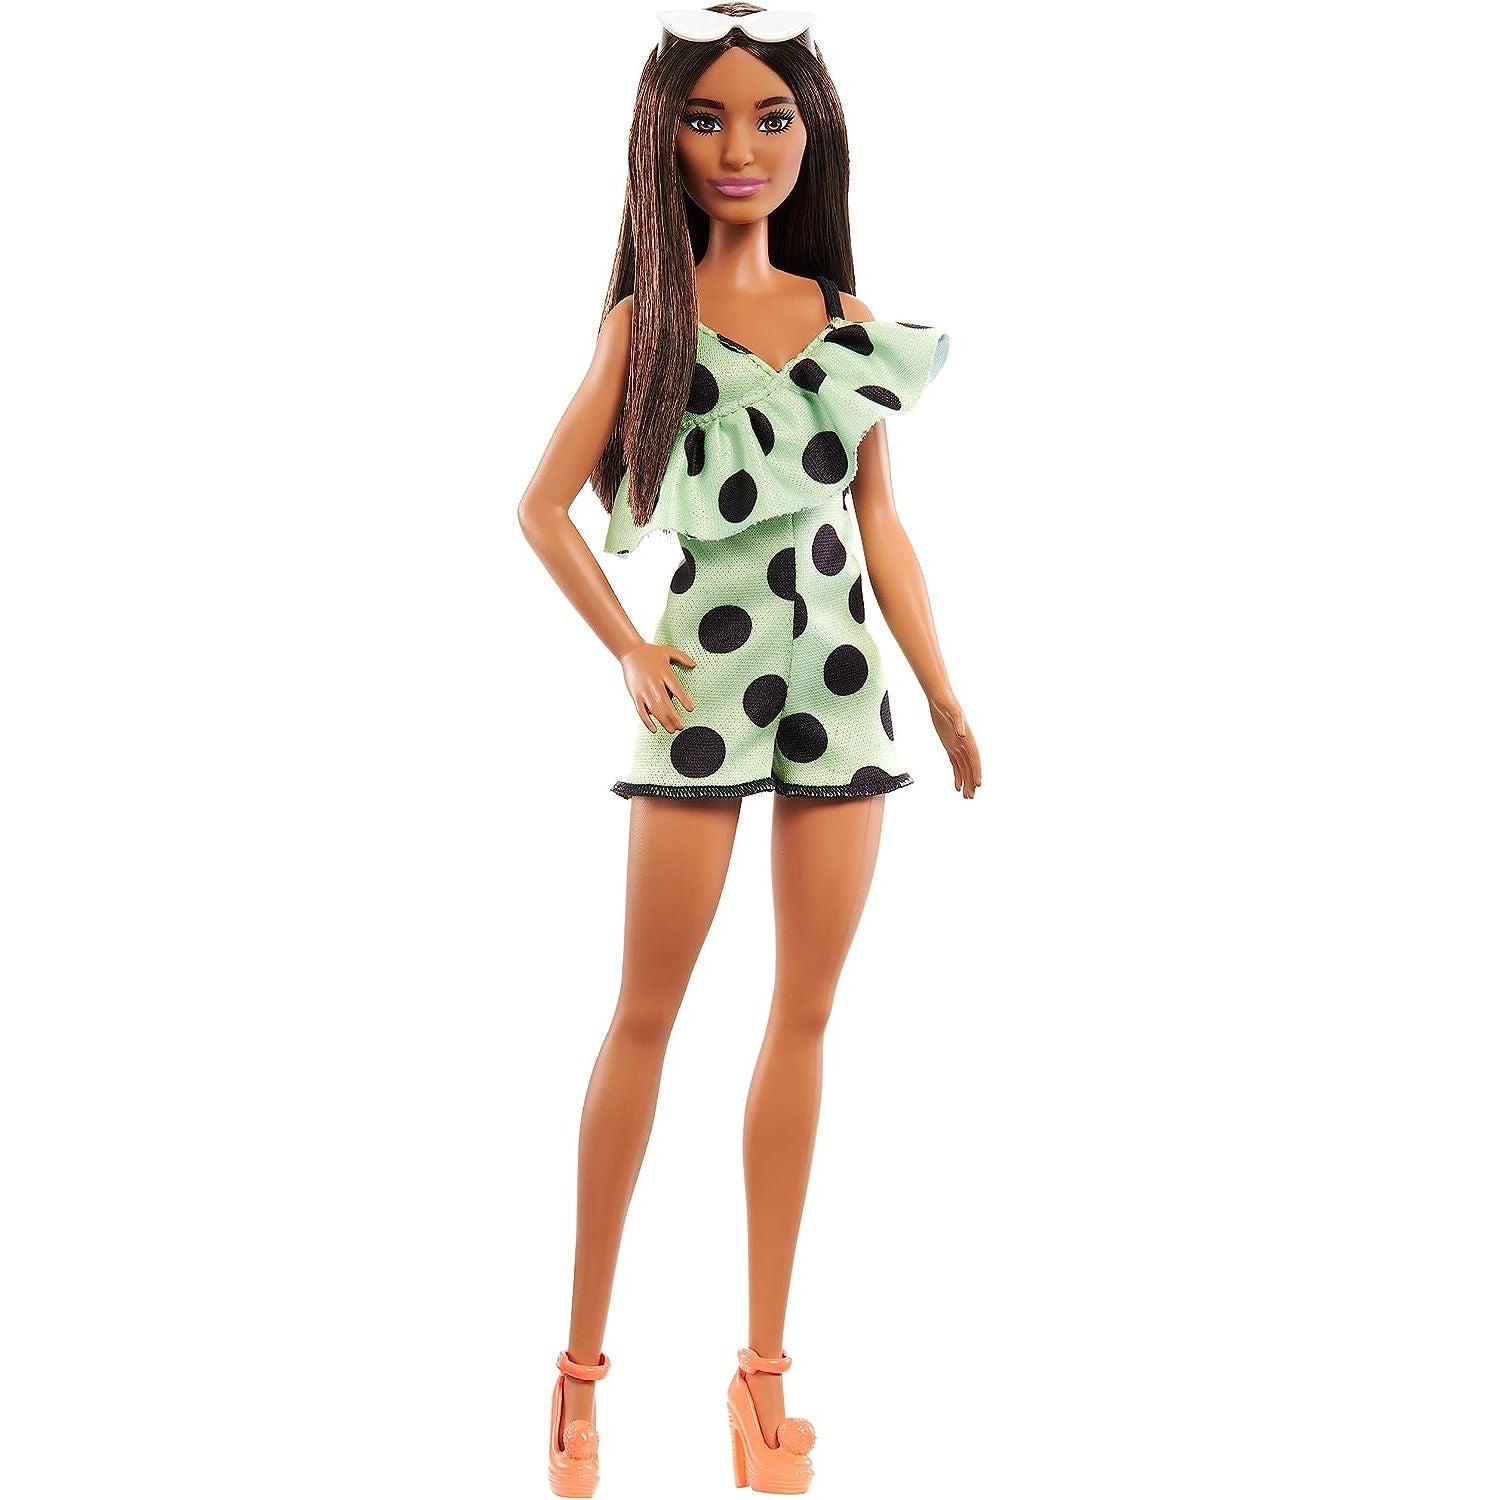 Barbie Fashionista Doll 200 - Brunette with Polka Dot Romper Barbie